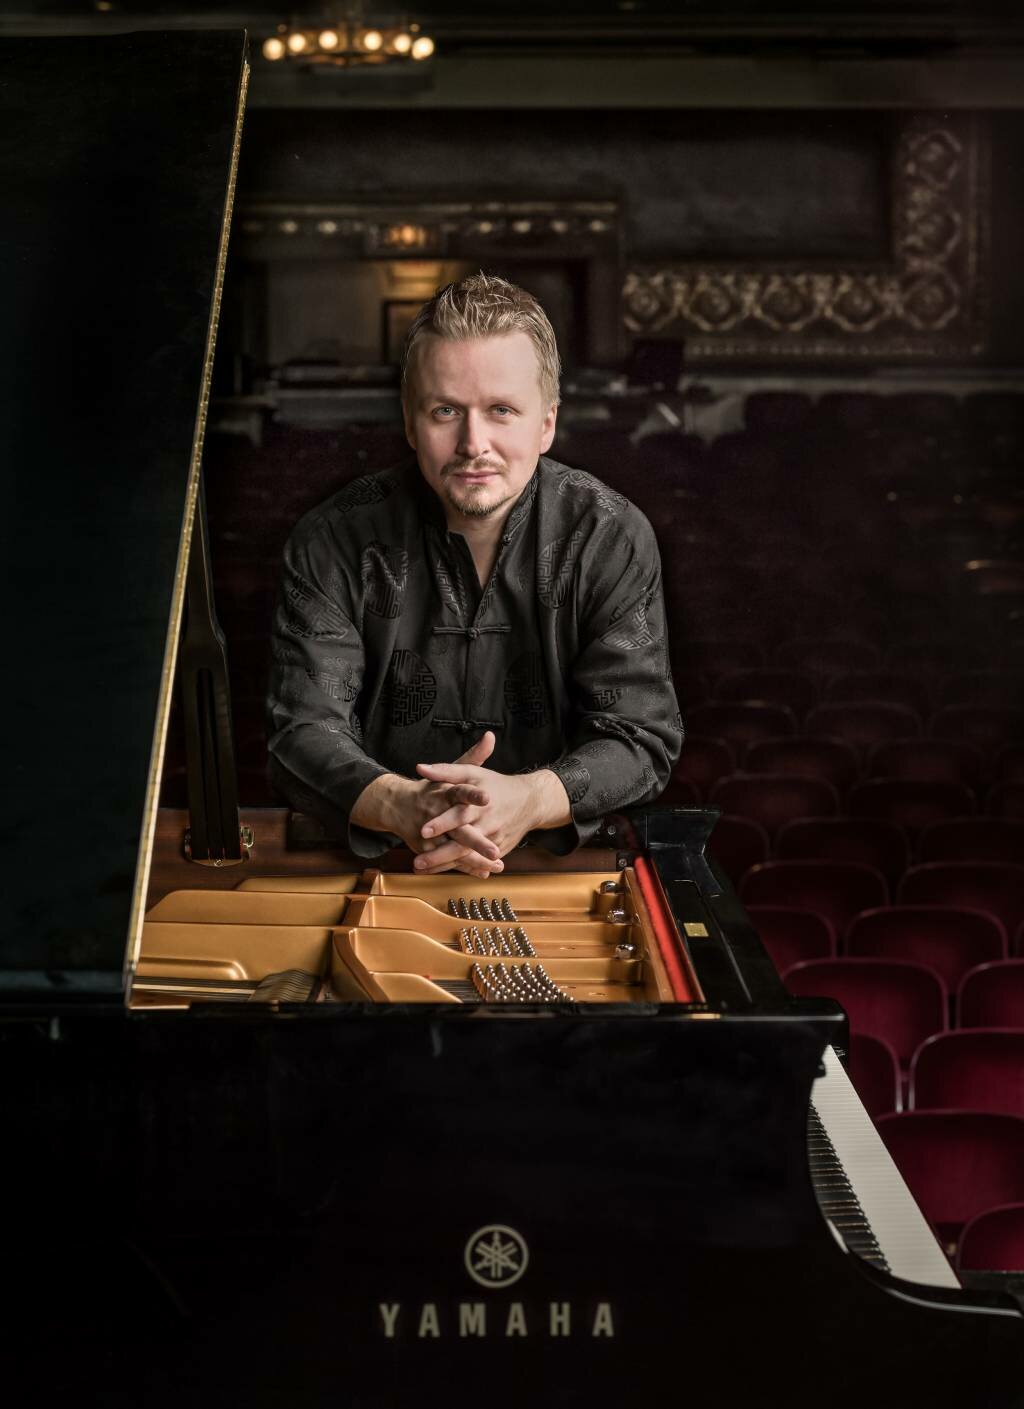 President’s chamber Music Series features Ilya Yakushev on piano at WNMU Nov. 16.